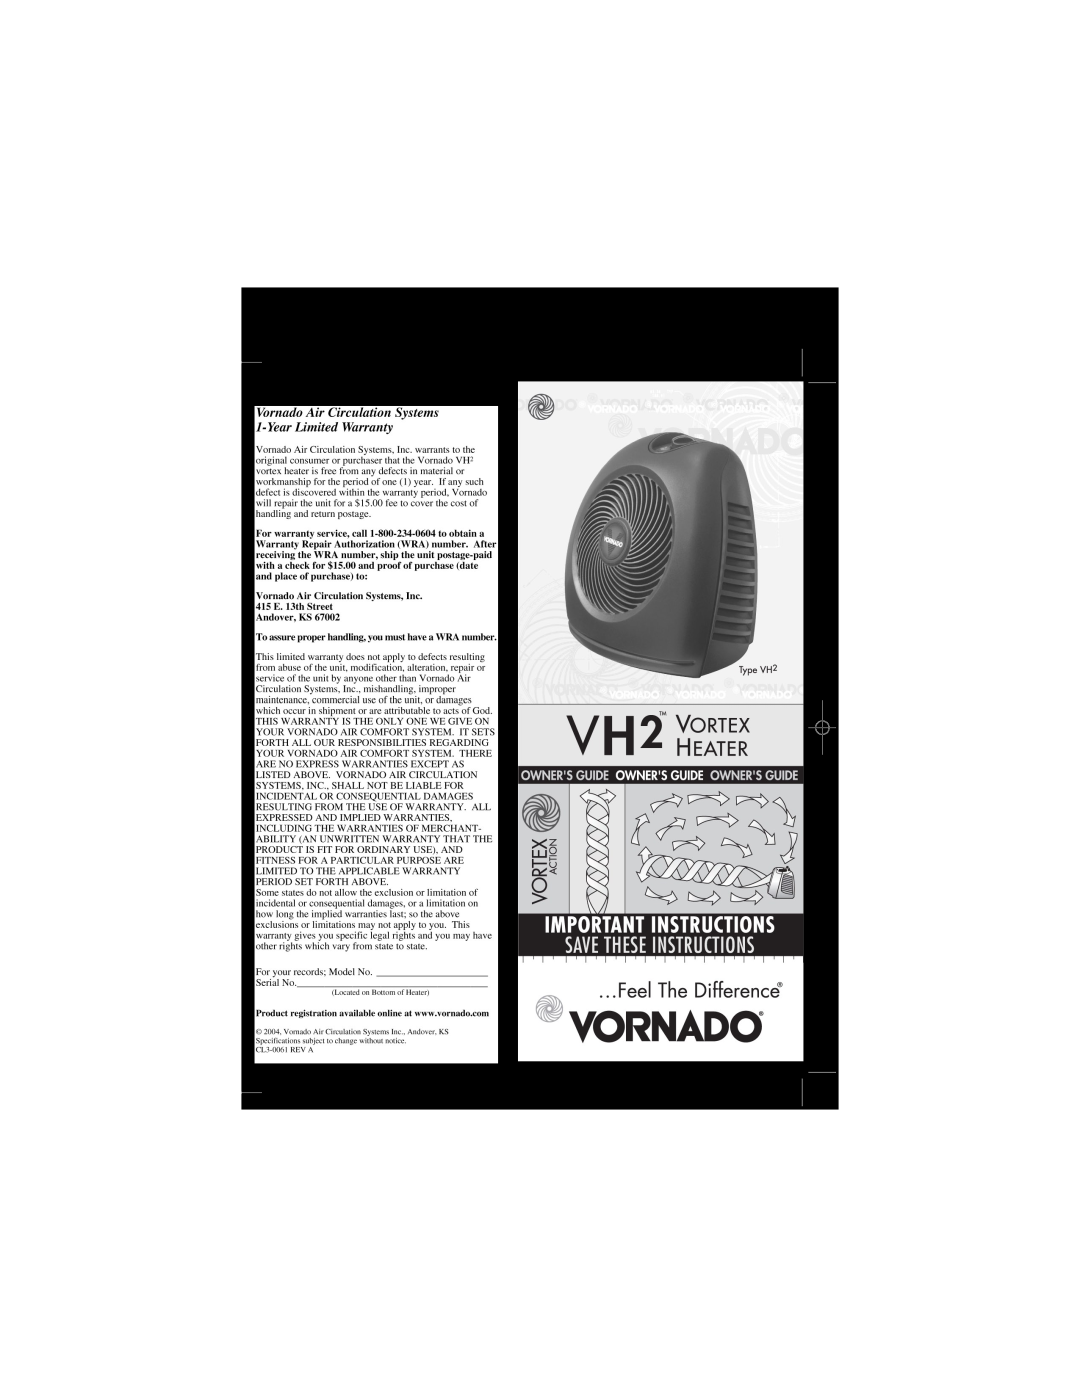 Vornado VH2, VORNADO, VH102 manual Vornado Air, LLC, CL3-0061RE CL7-0061RE 